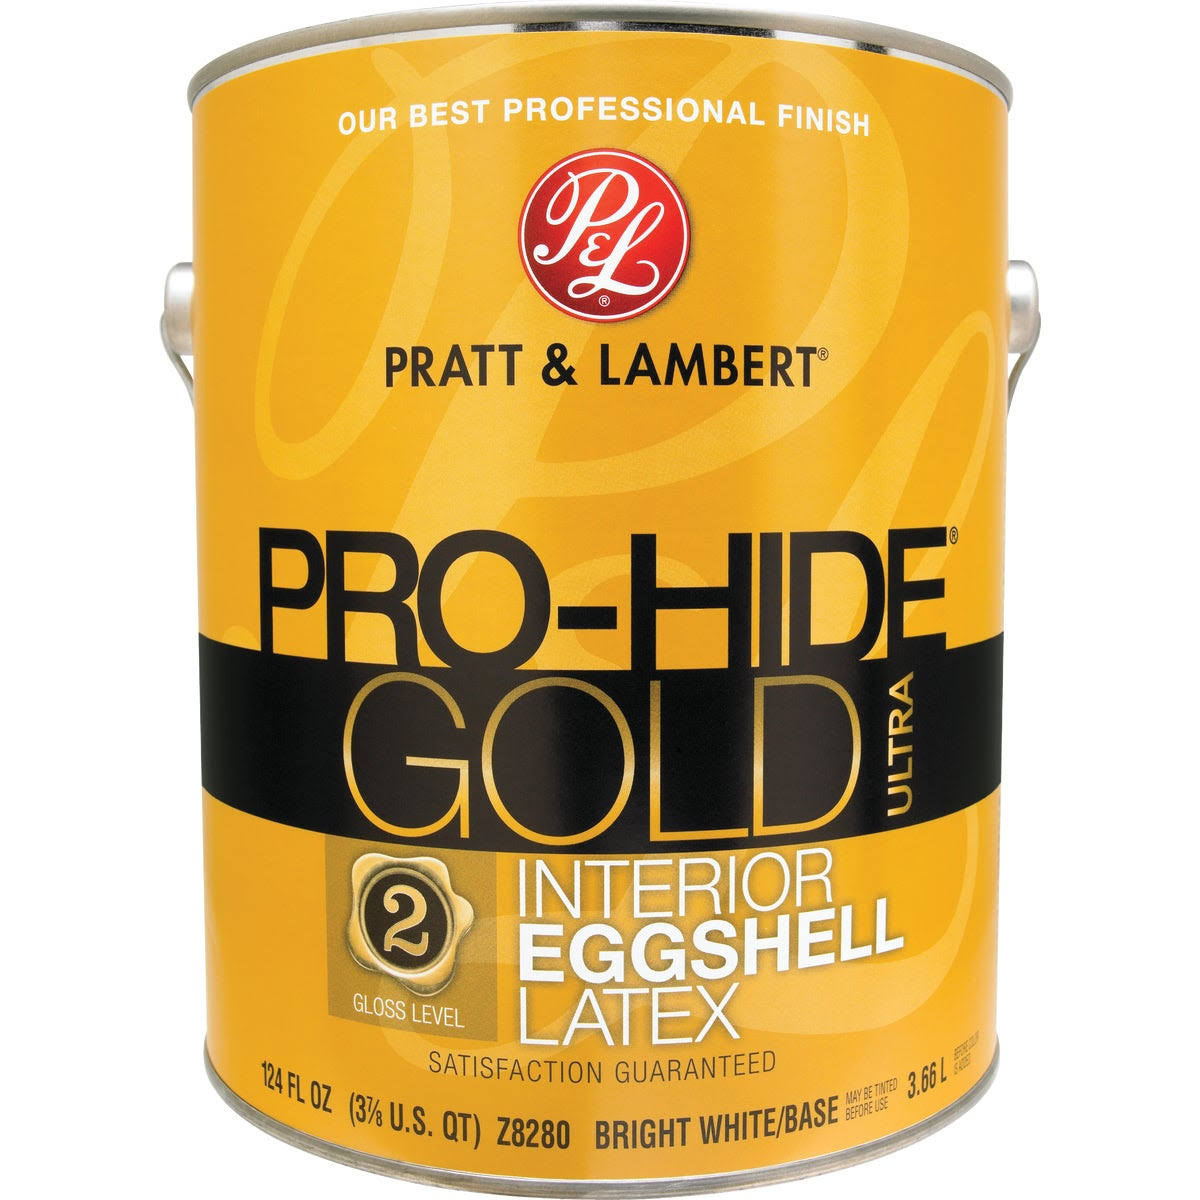 Pratt & Lambert Pro-Hide Gold Ultra Latex Eggshell Interior Wall Paint